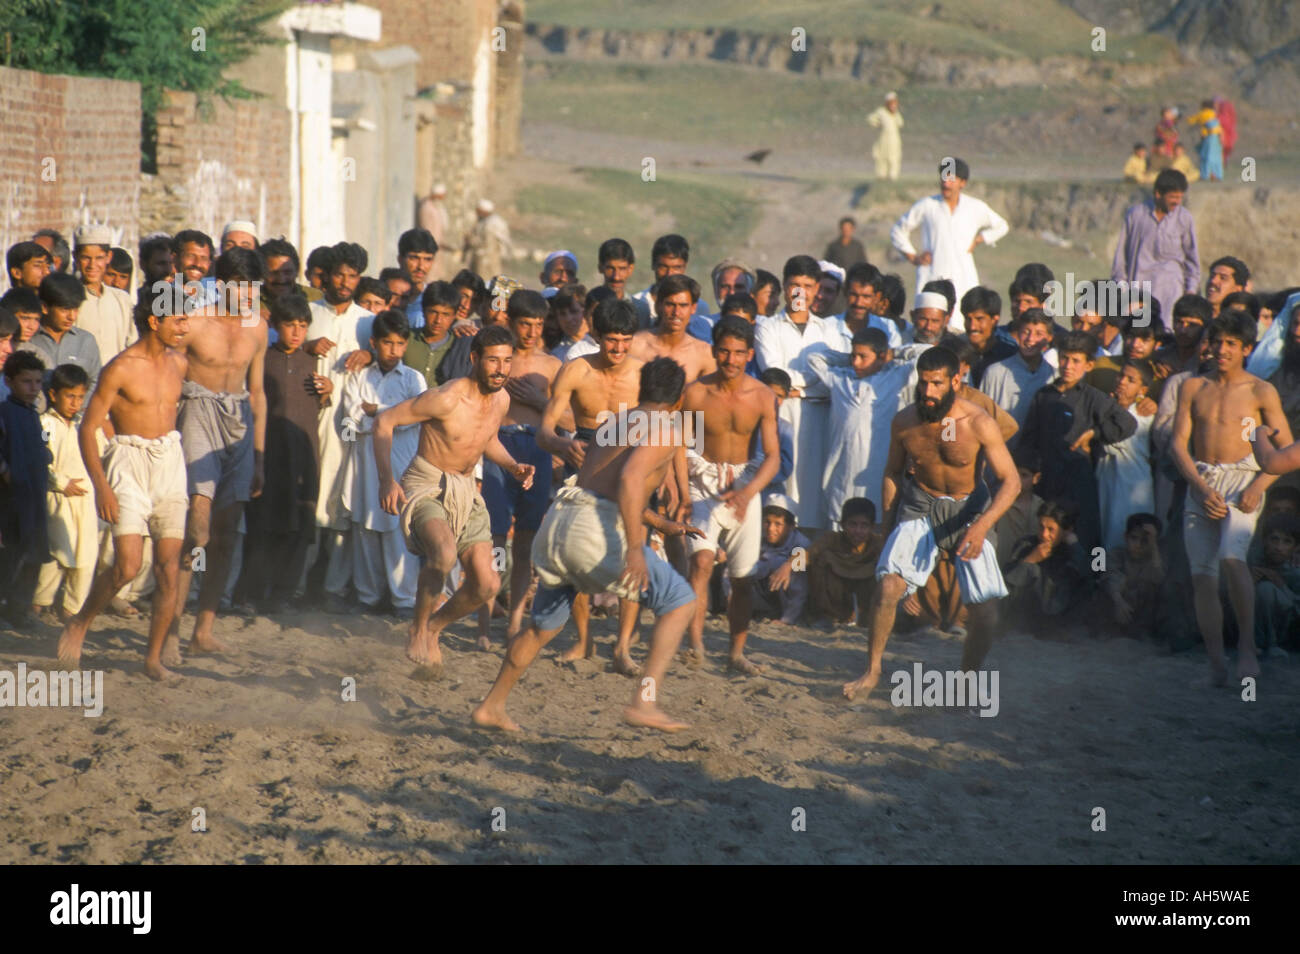 Kabaddi a kind of wrestling near Mingora Swat Valley Pakistan Asia Stock Photo